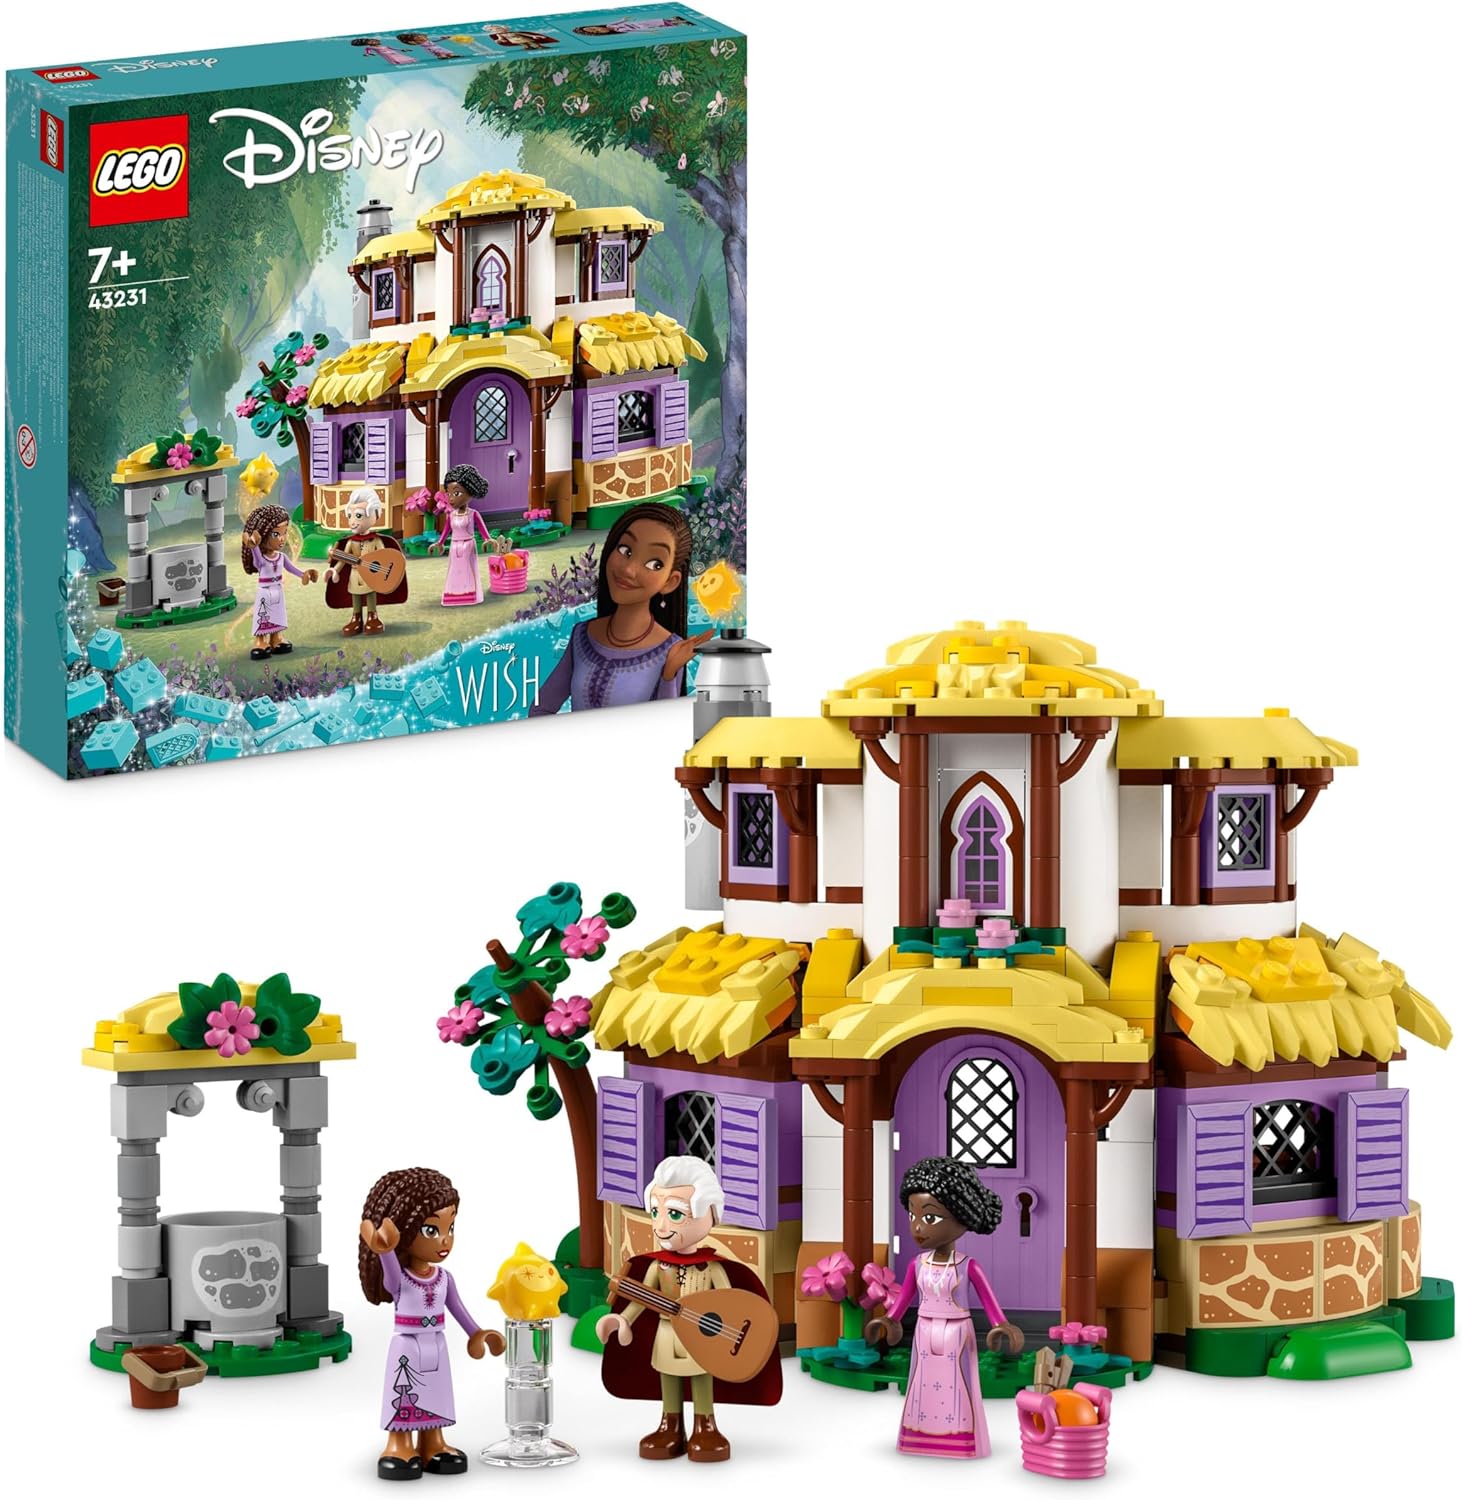 LEGO 43231 Disney Wish Asha\'s House Set, Opening Toy Dollhouse from the Wish Movie with Asha, Sakina and Sabino Mini Dolls and Star Figure, Kids, Girls and Boys